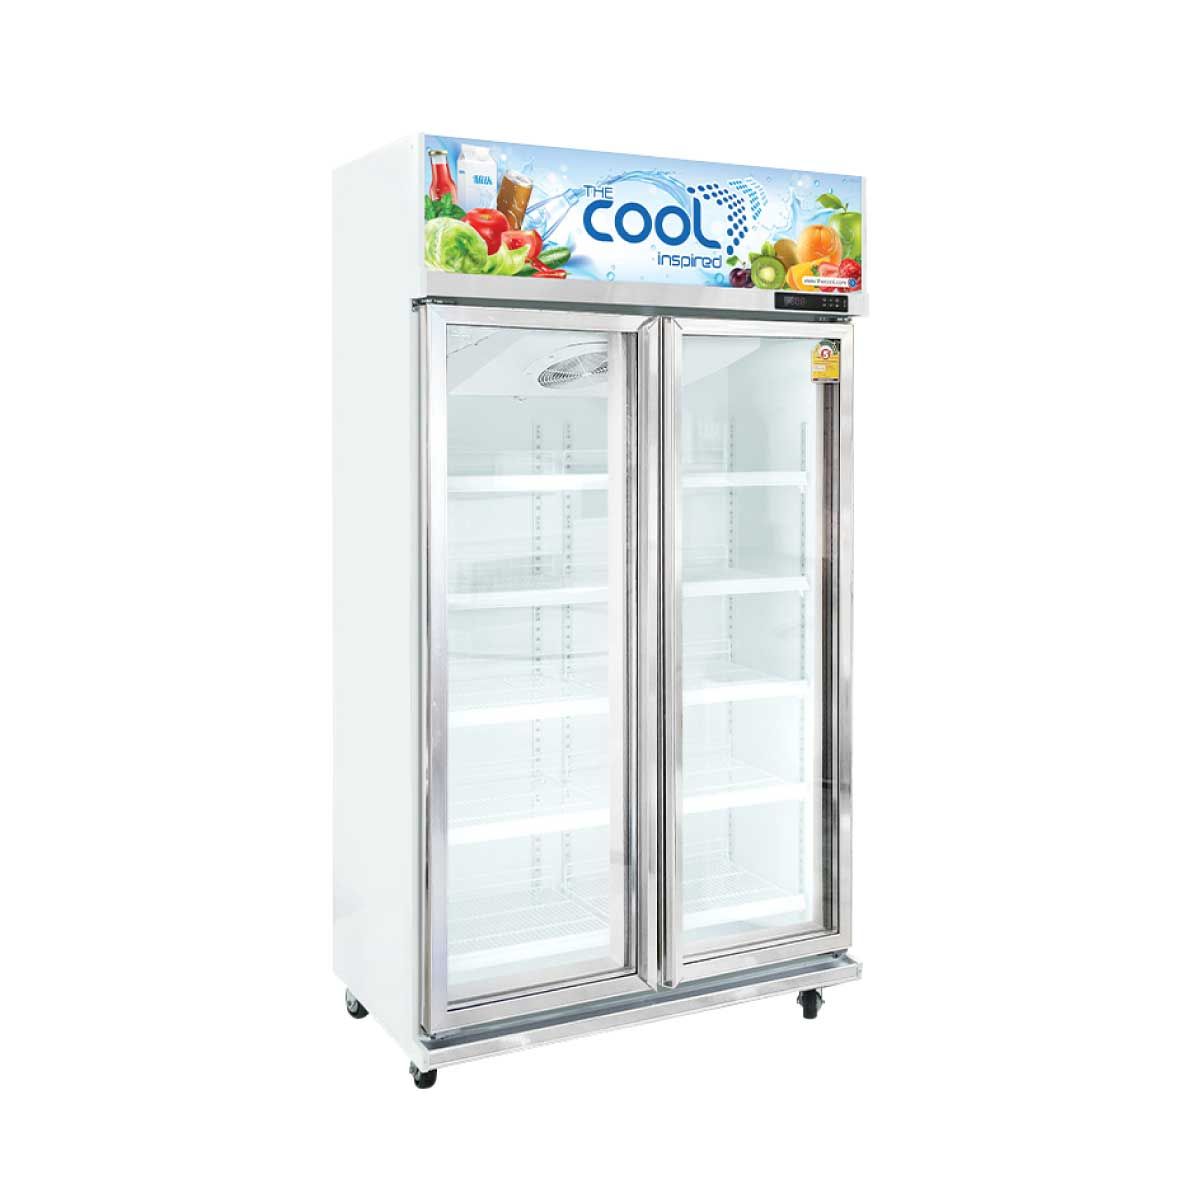 THE COOL ตู้แช่เย็น 2 ประตู รุ่น ALEX 2P Premium ความจุ 27คิว